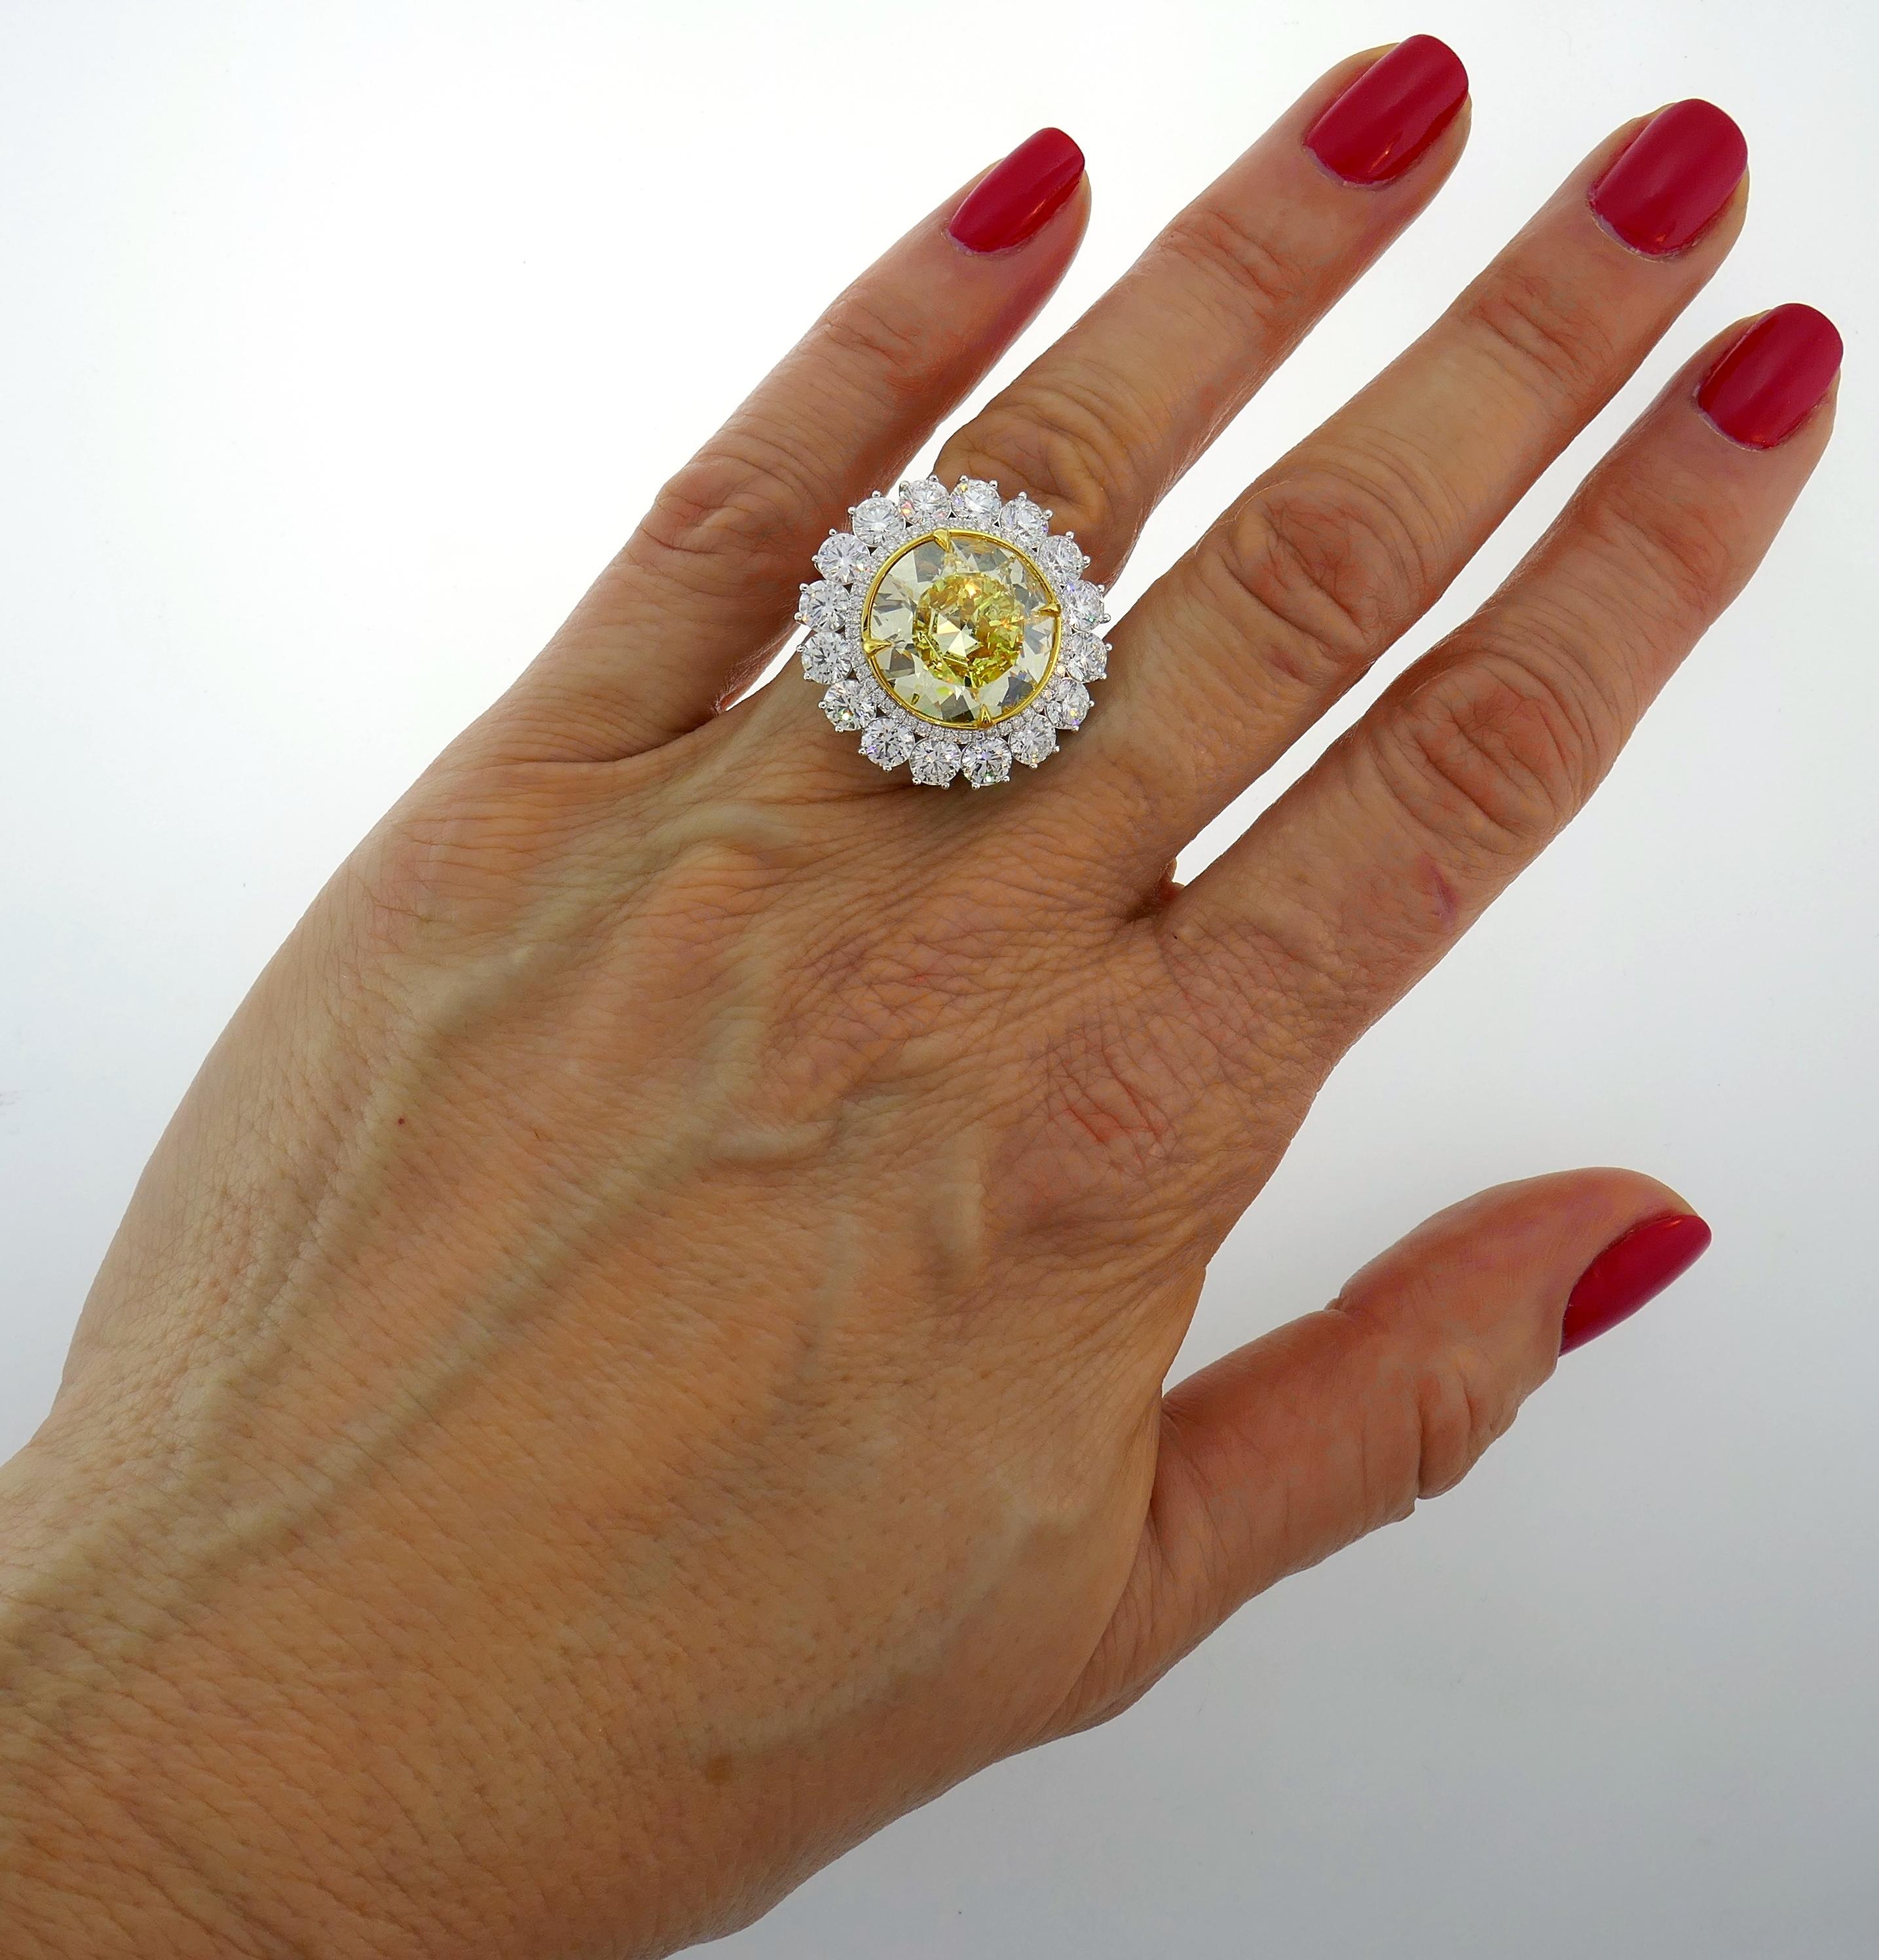 Fancy Intense Yellow Diamond White Gold Ring 10.04 Carat VS2 GIA 4